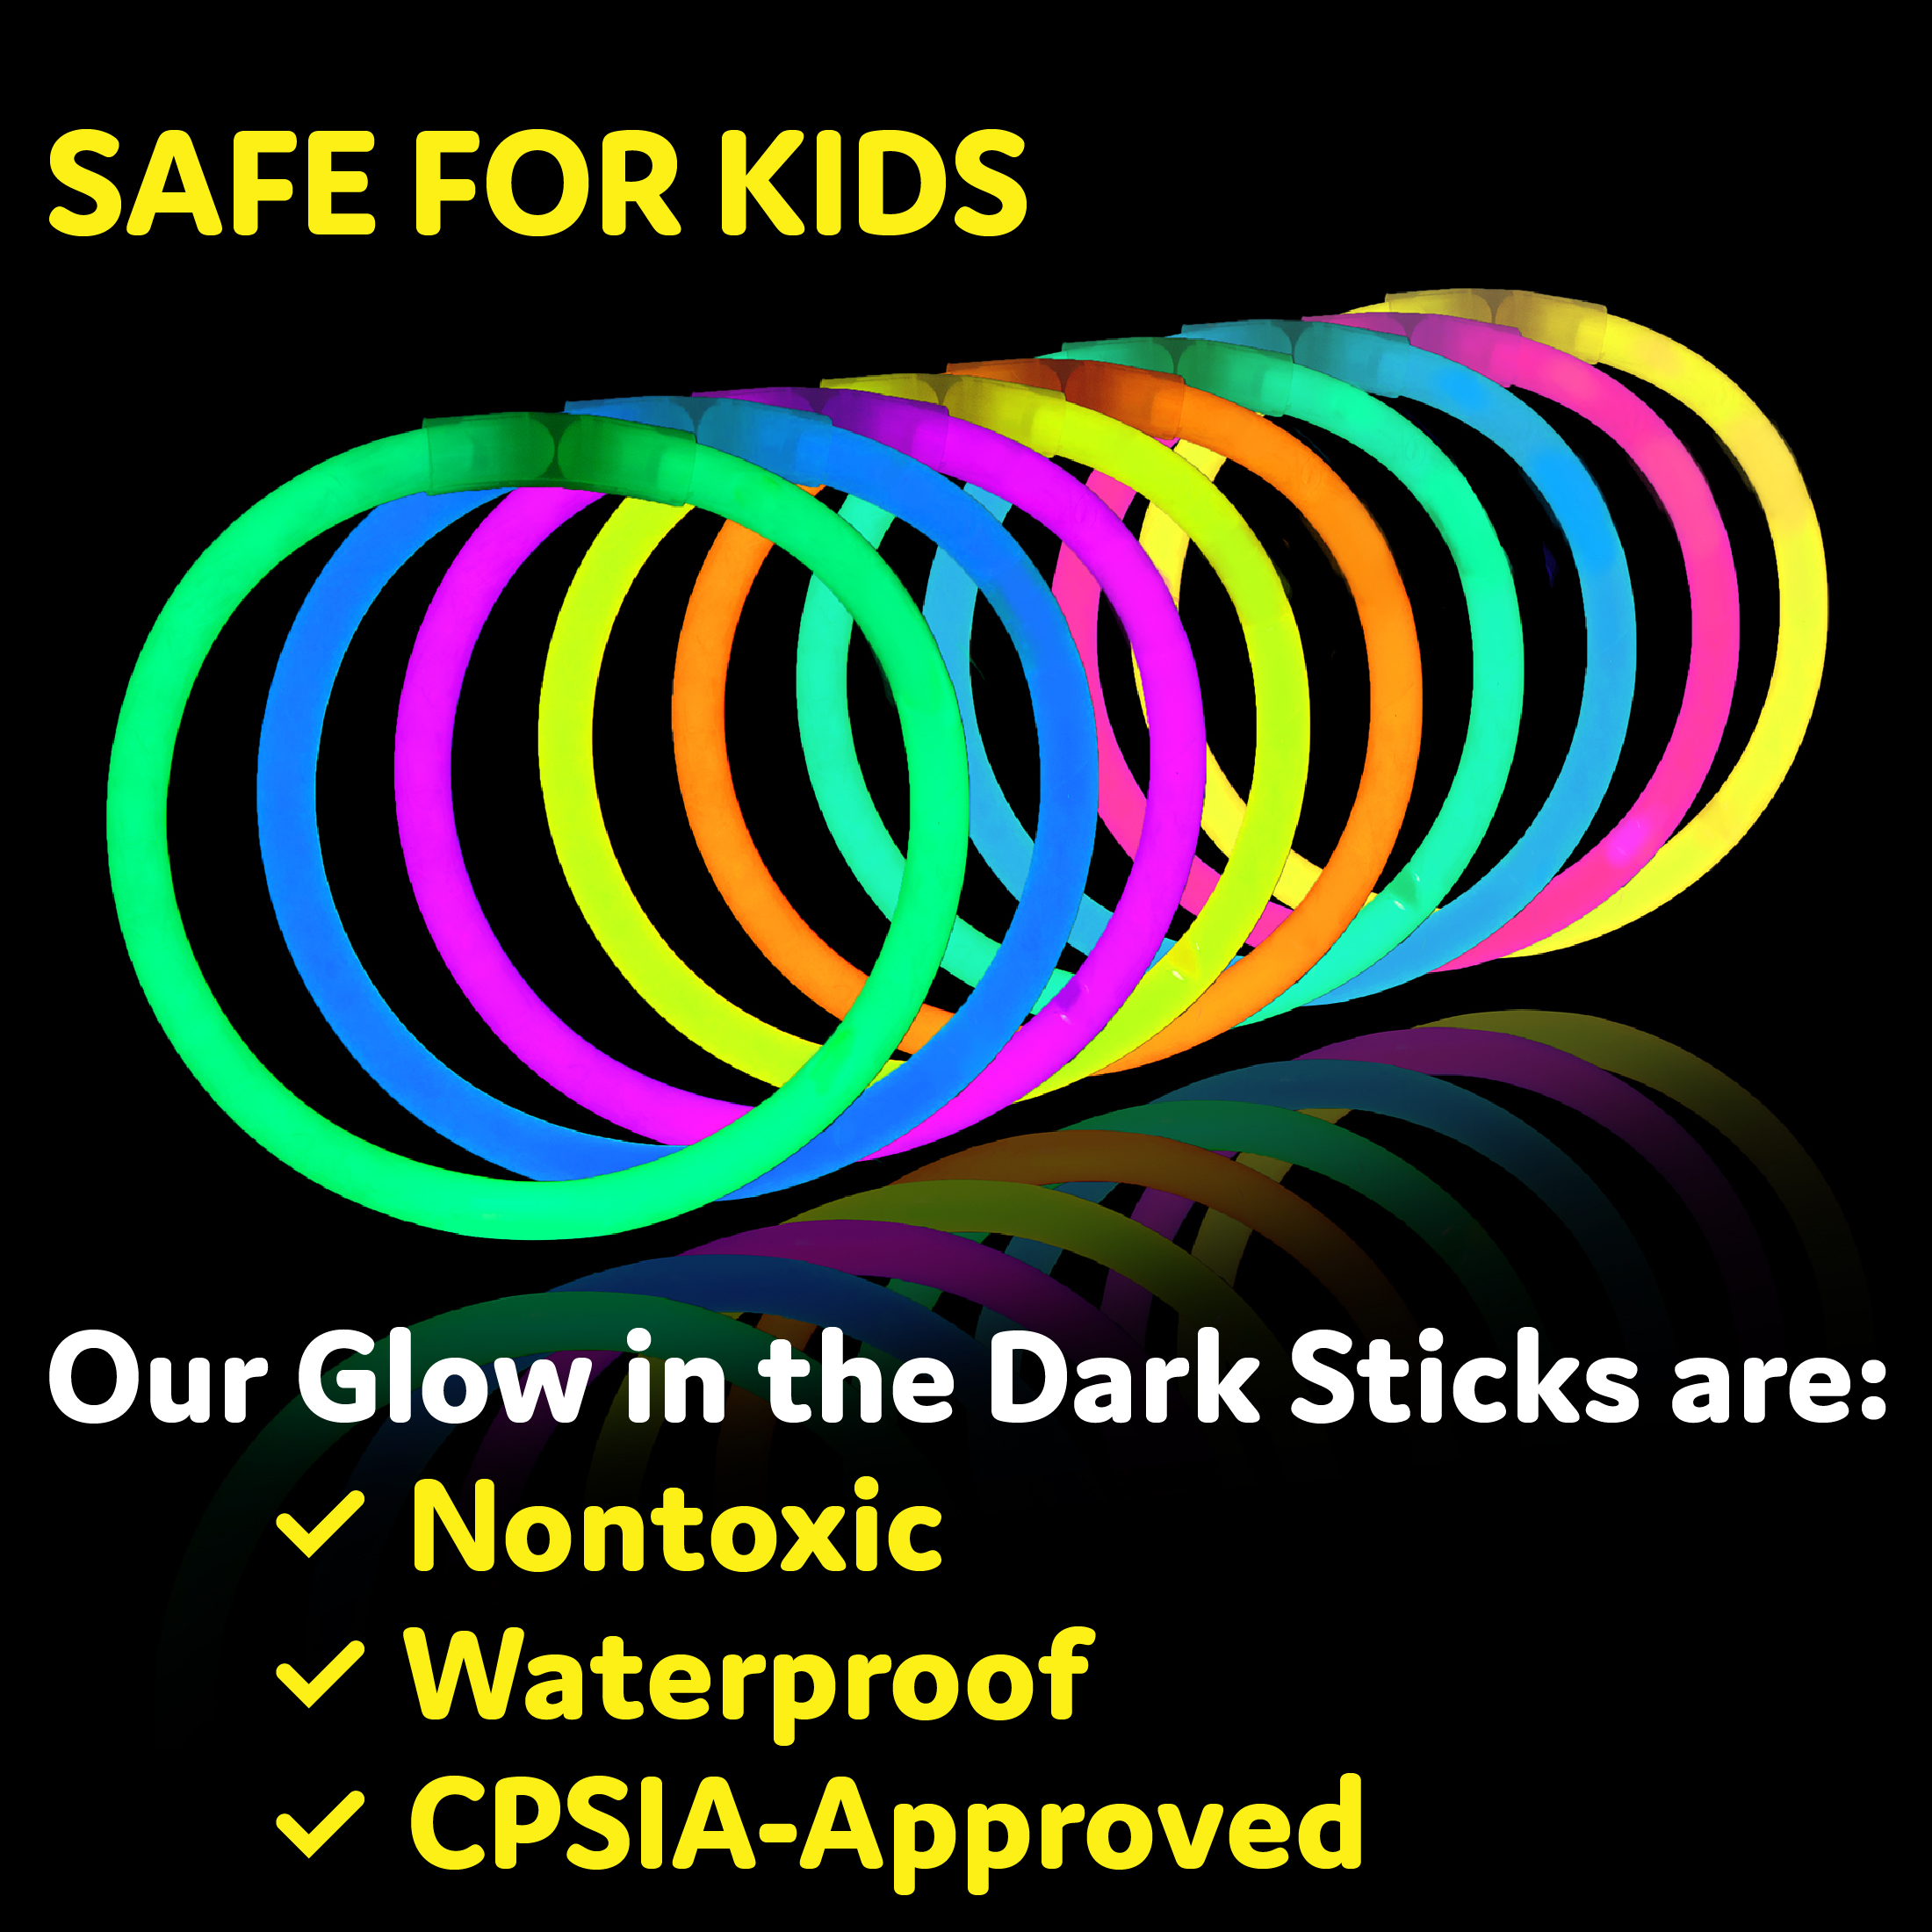 Glow Sticks Bulk Party Favors 200Pk - 8 Glow in The Dark Party Supplies, Light